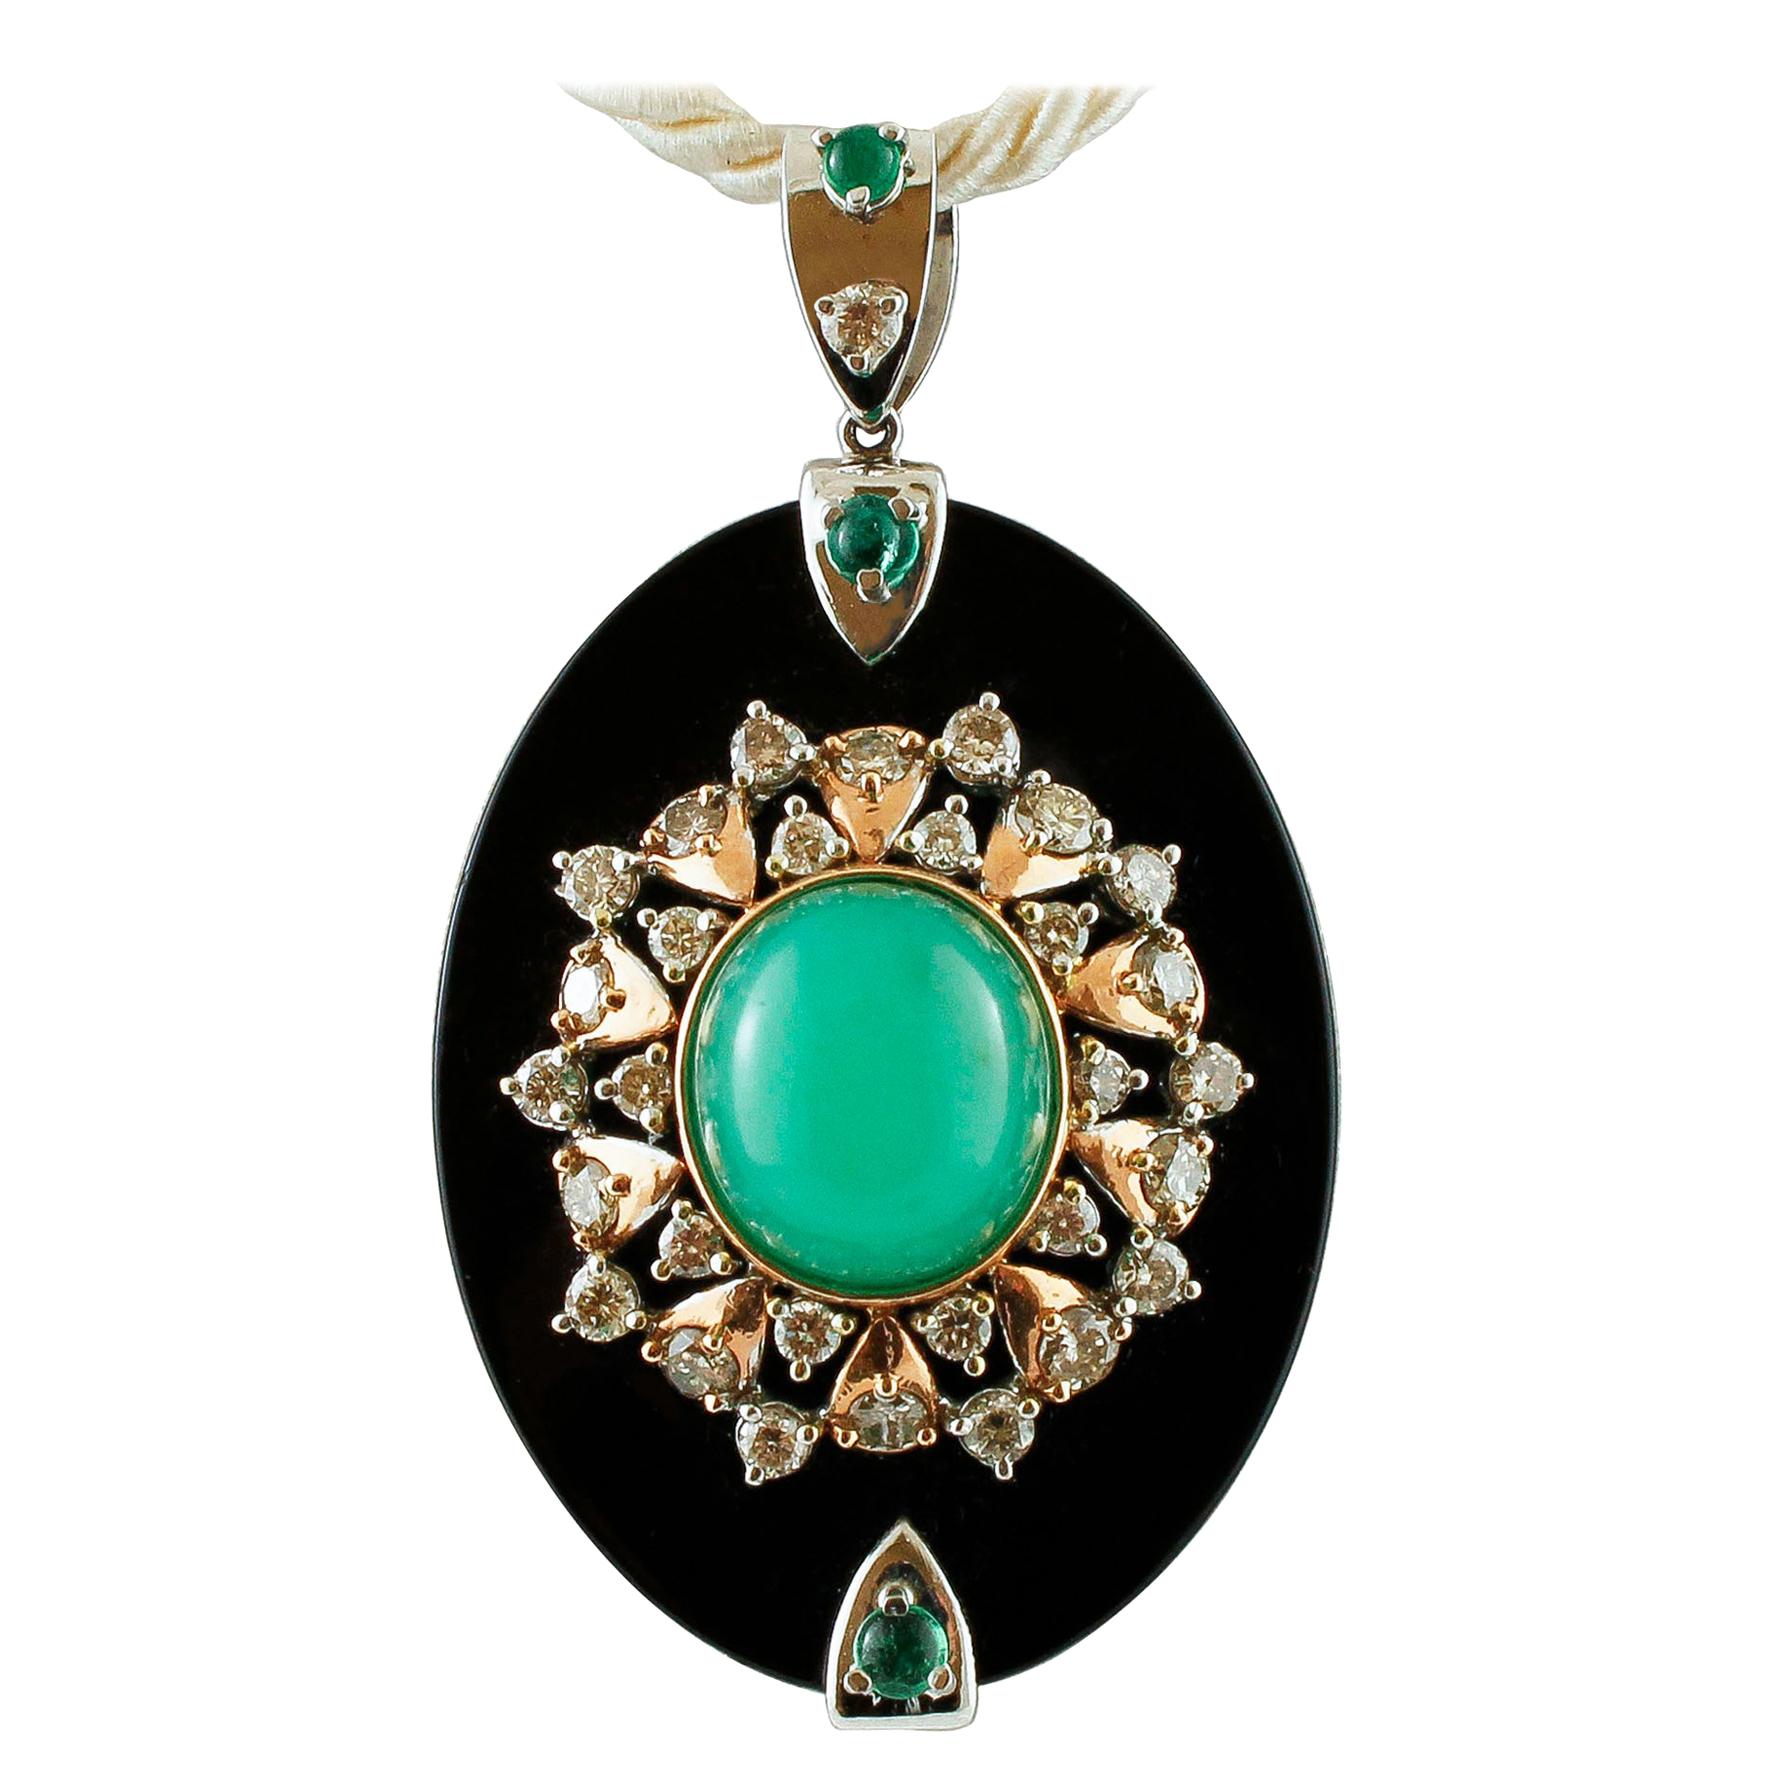 Diamonds Emeralds Green Chrysophrase Onyx Plate Rose White Gold Pendant Necklace